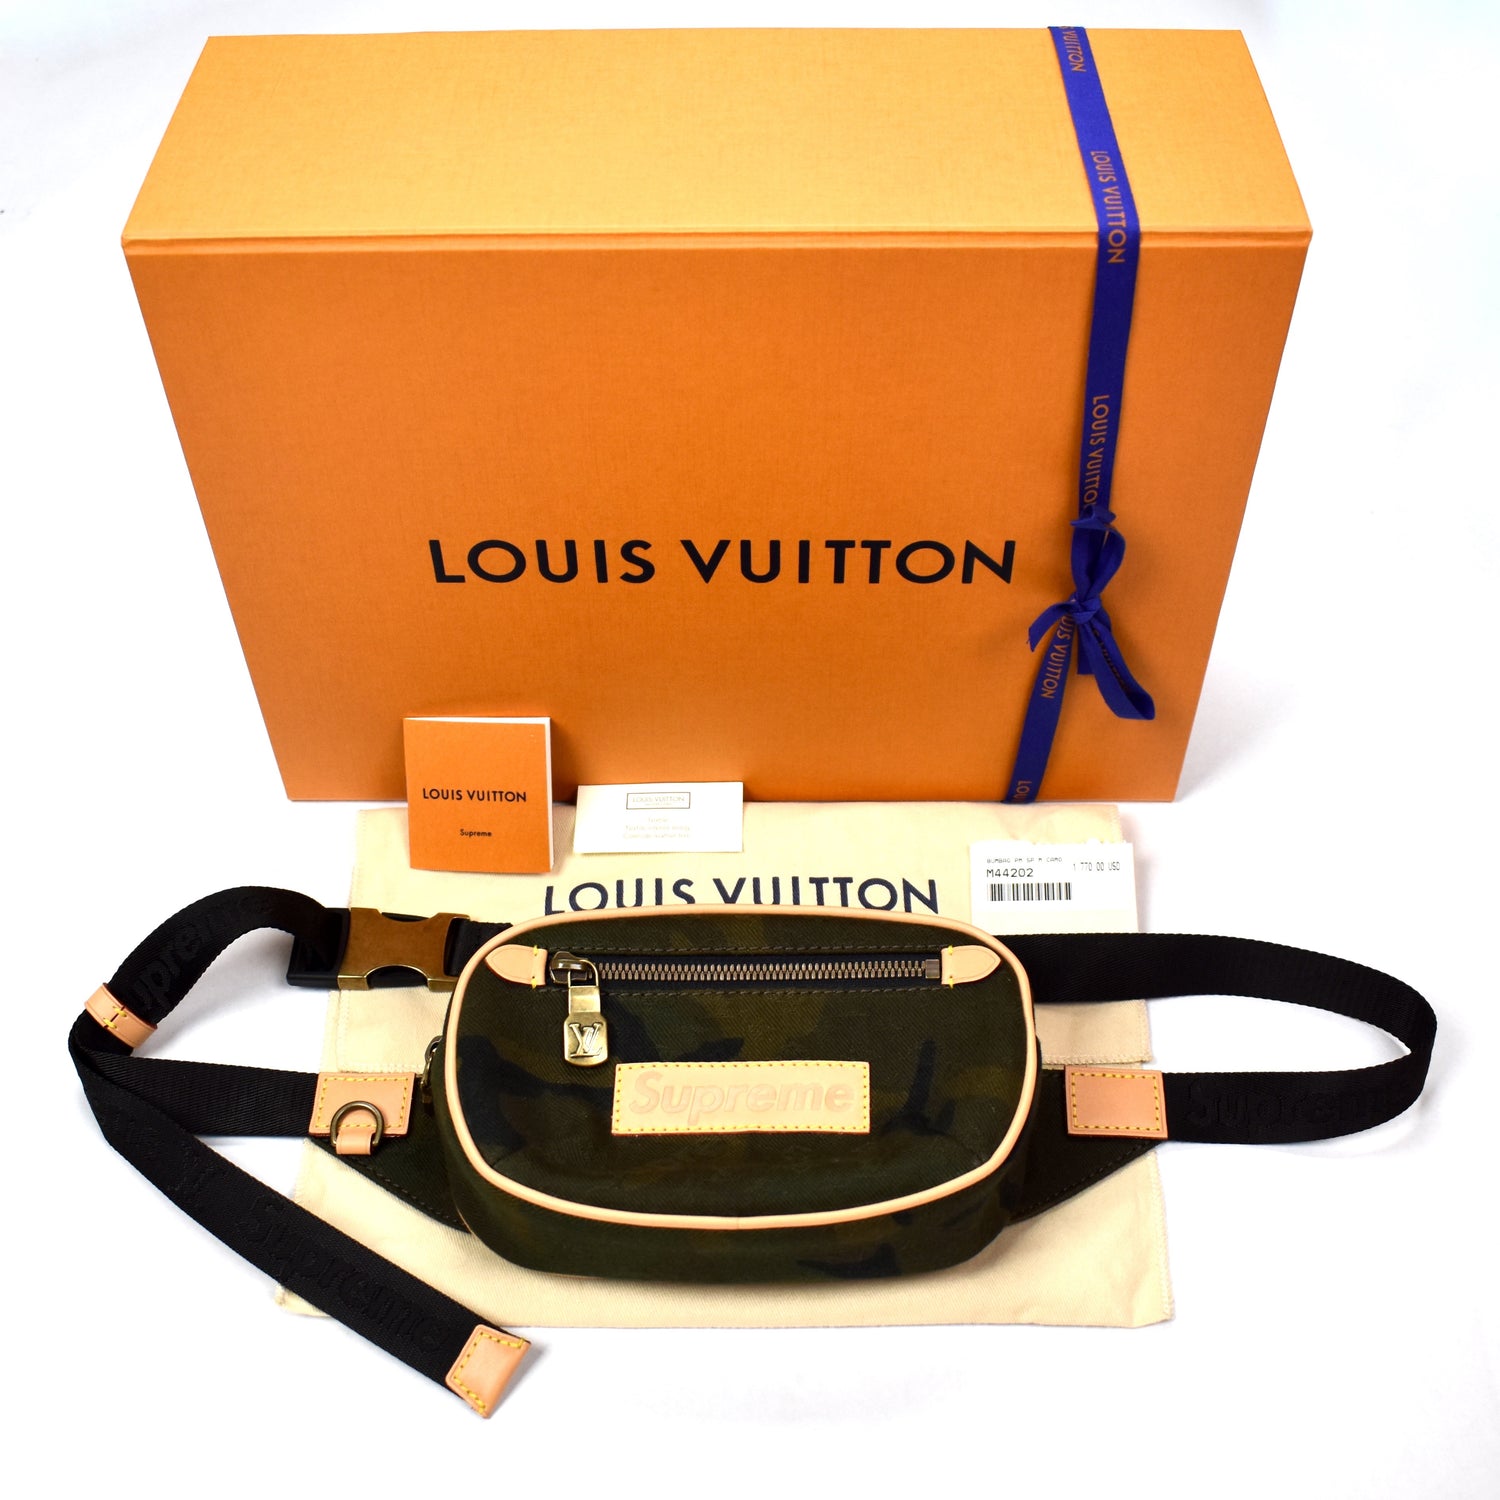 Louis Vuitton Box Waist Bags & Fanny Packs